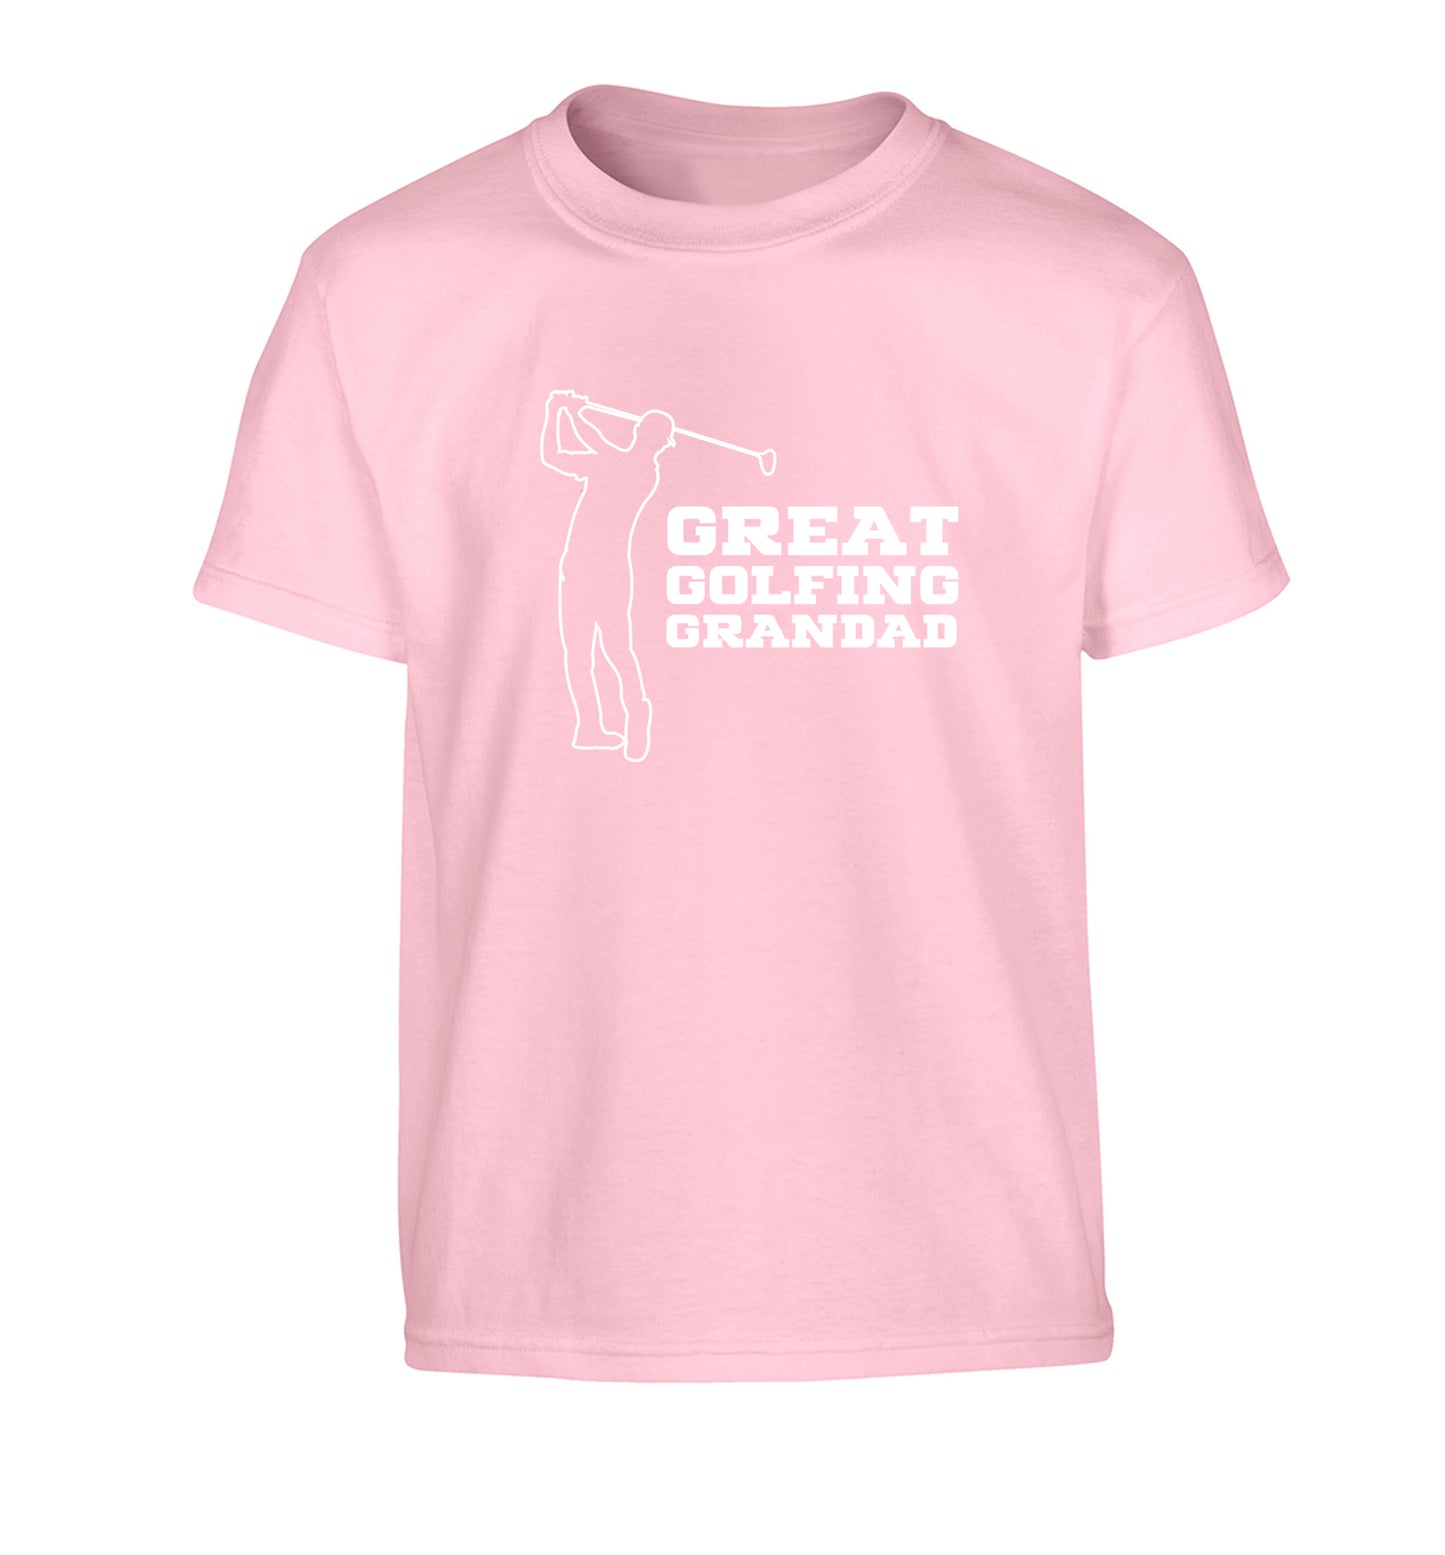 Great Golfing Grandad Children's light pink Tshirt 12-13 Years